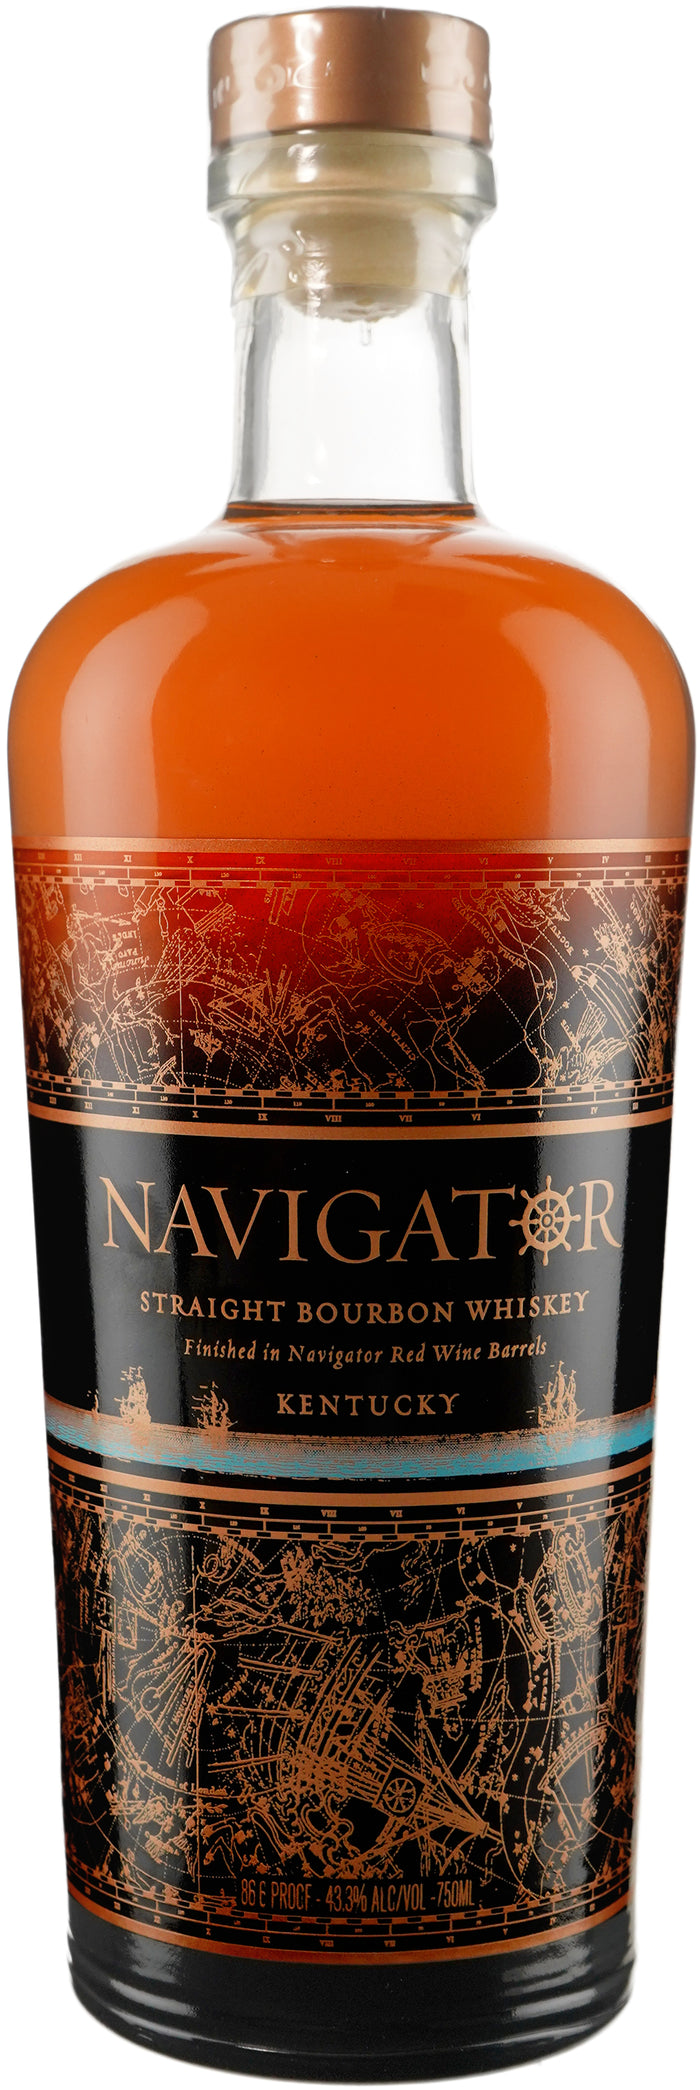 Navigator Straight Bourbon Finished in Navigator Red Wine Barrels Whiskey